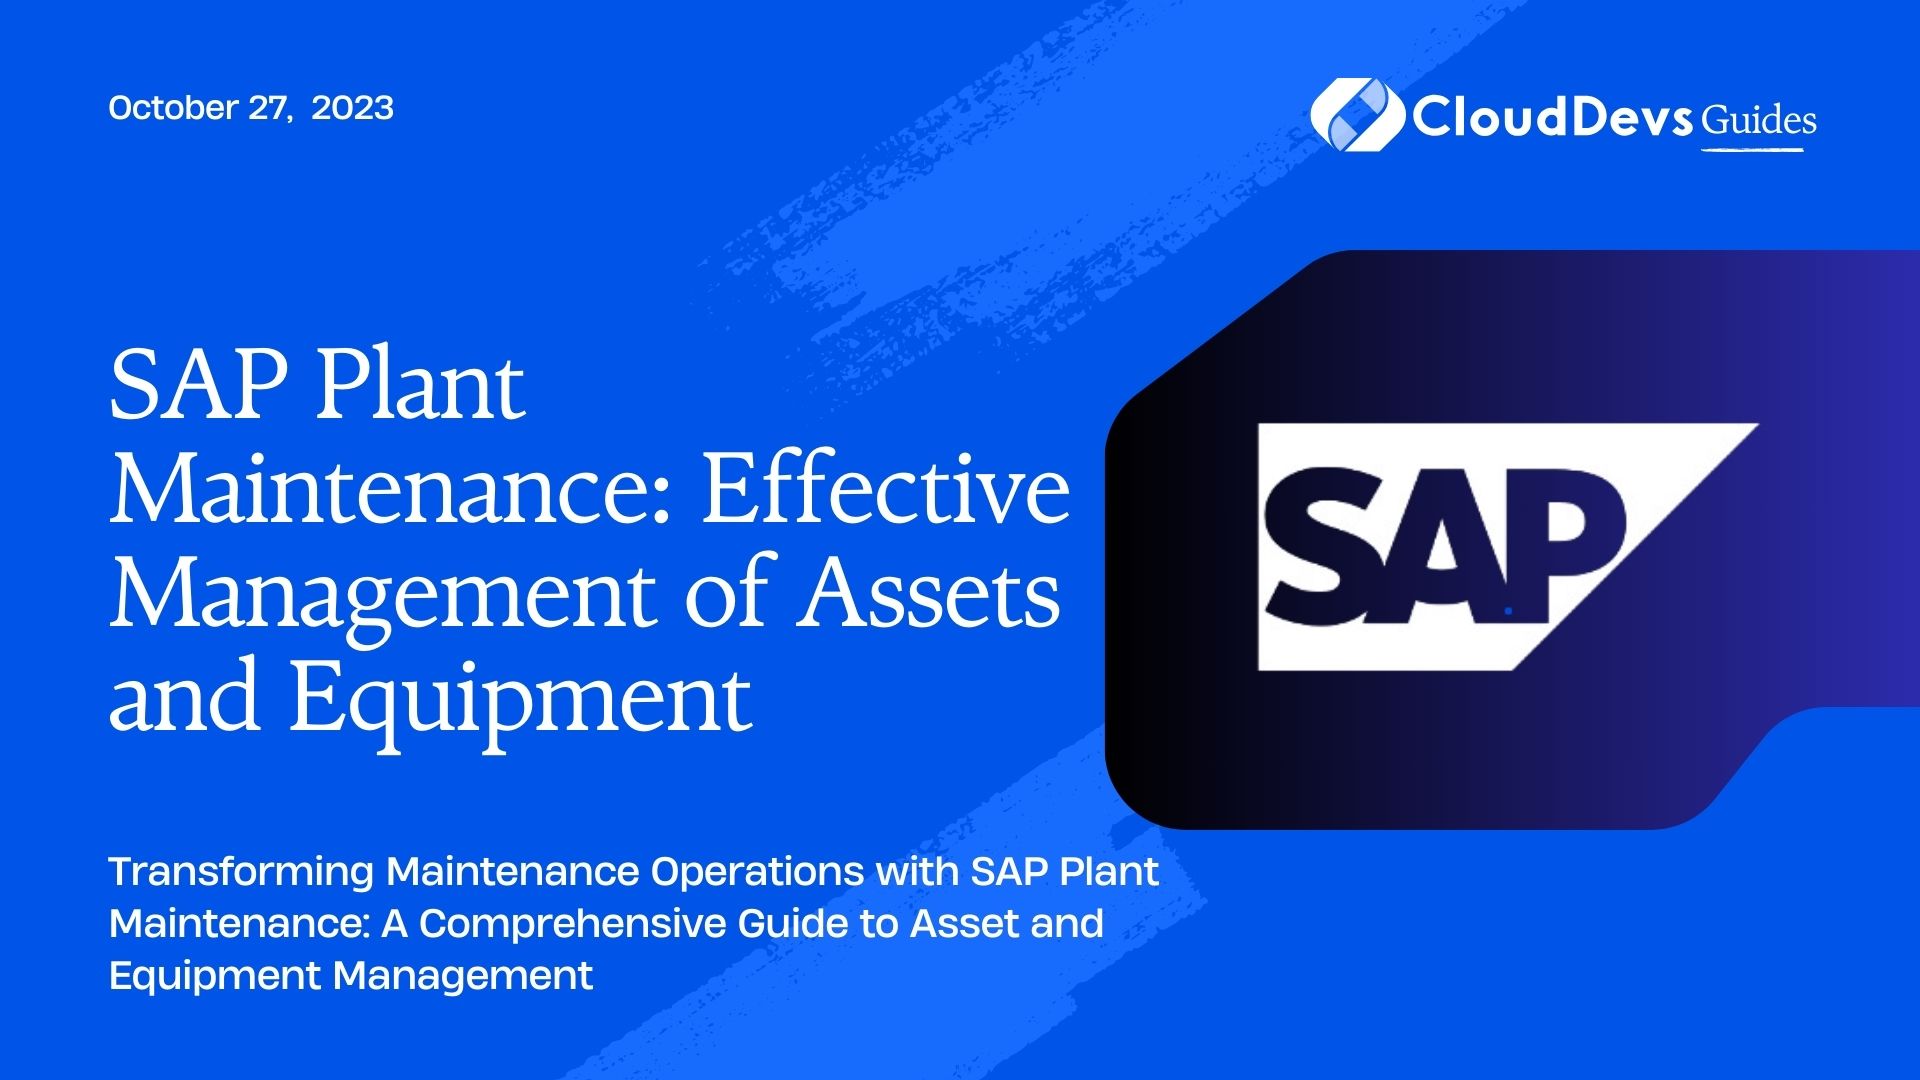 SAP Plant Maintenance: Effective Management of Assets and Equipment